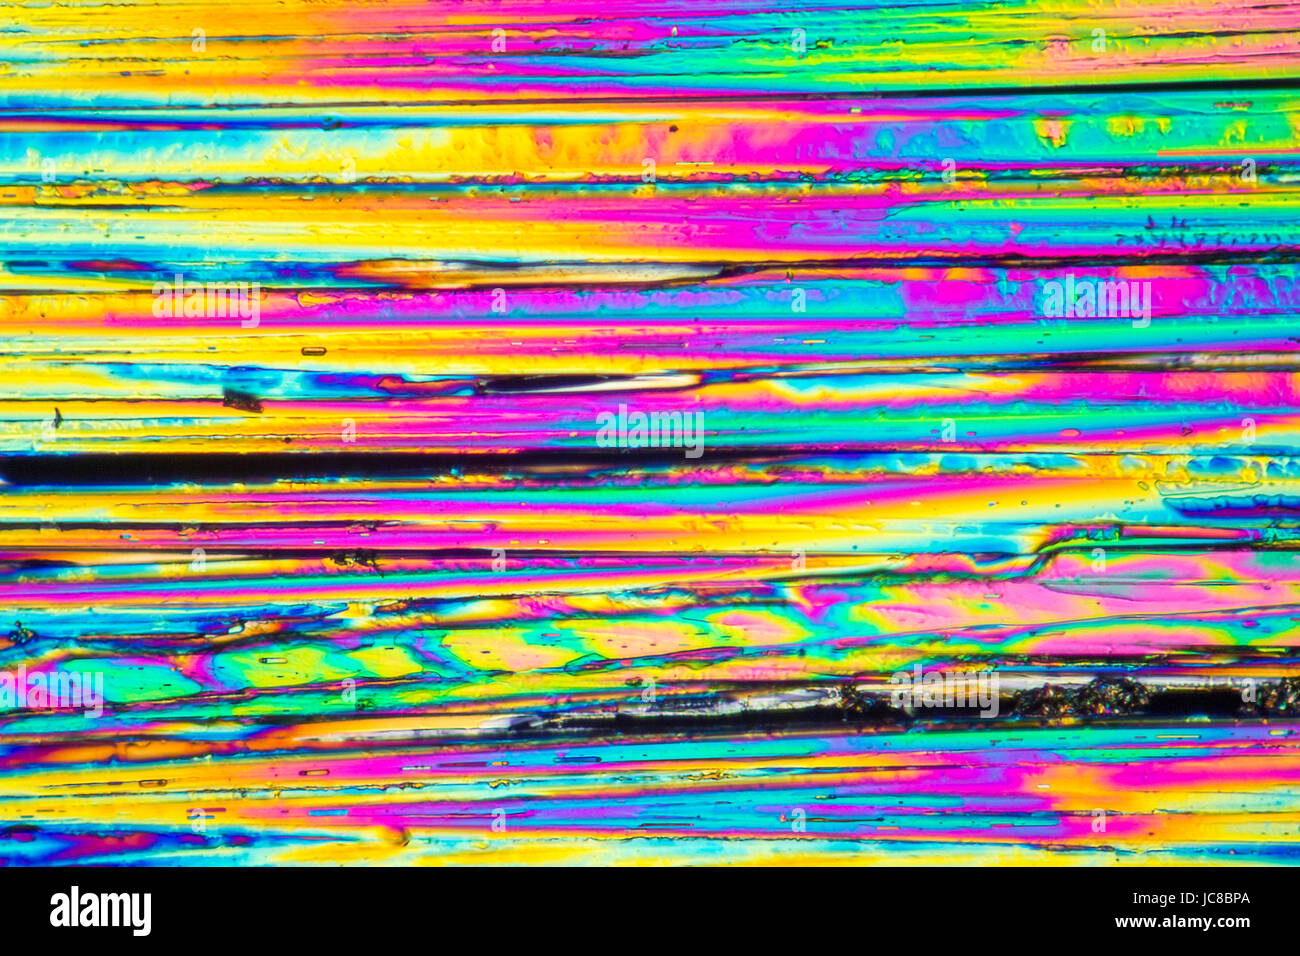 microscopic shot of urea micro crystals in polarized light Stock Photo